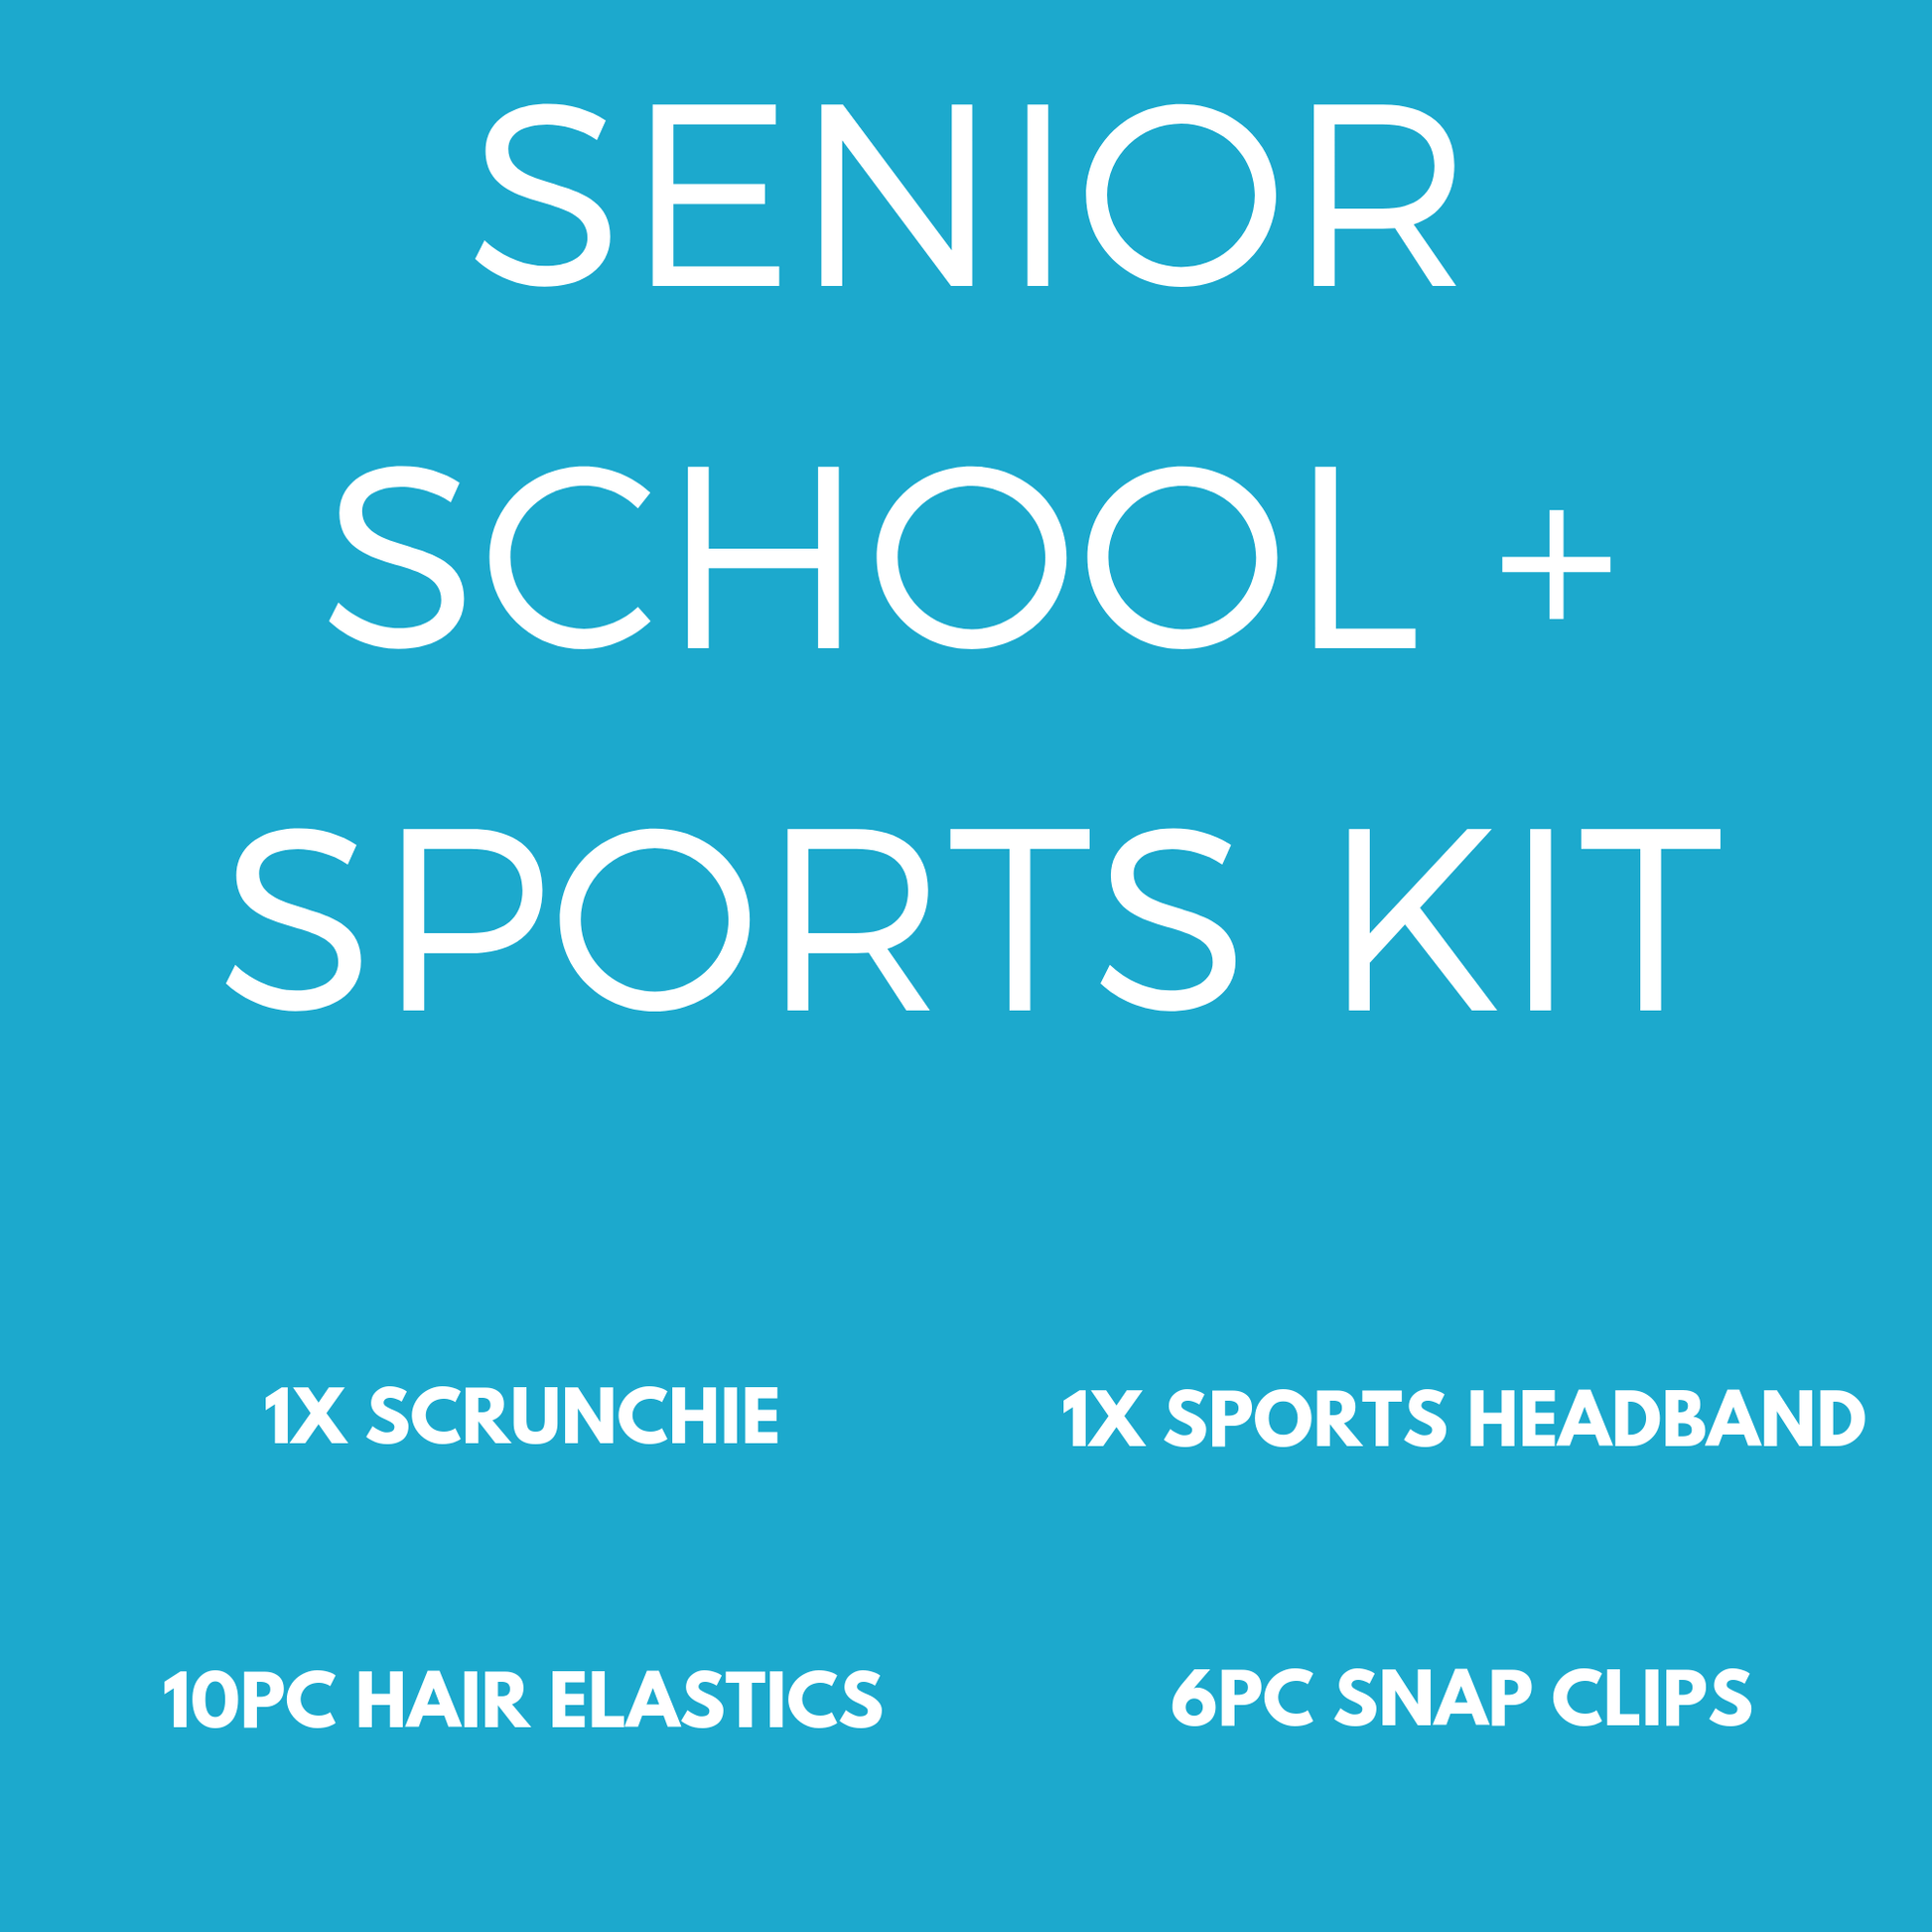 Senior School + Sports Kit (19pc) - School kits - School Uniform Hair Accessories - Ponytails and Fairytales